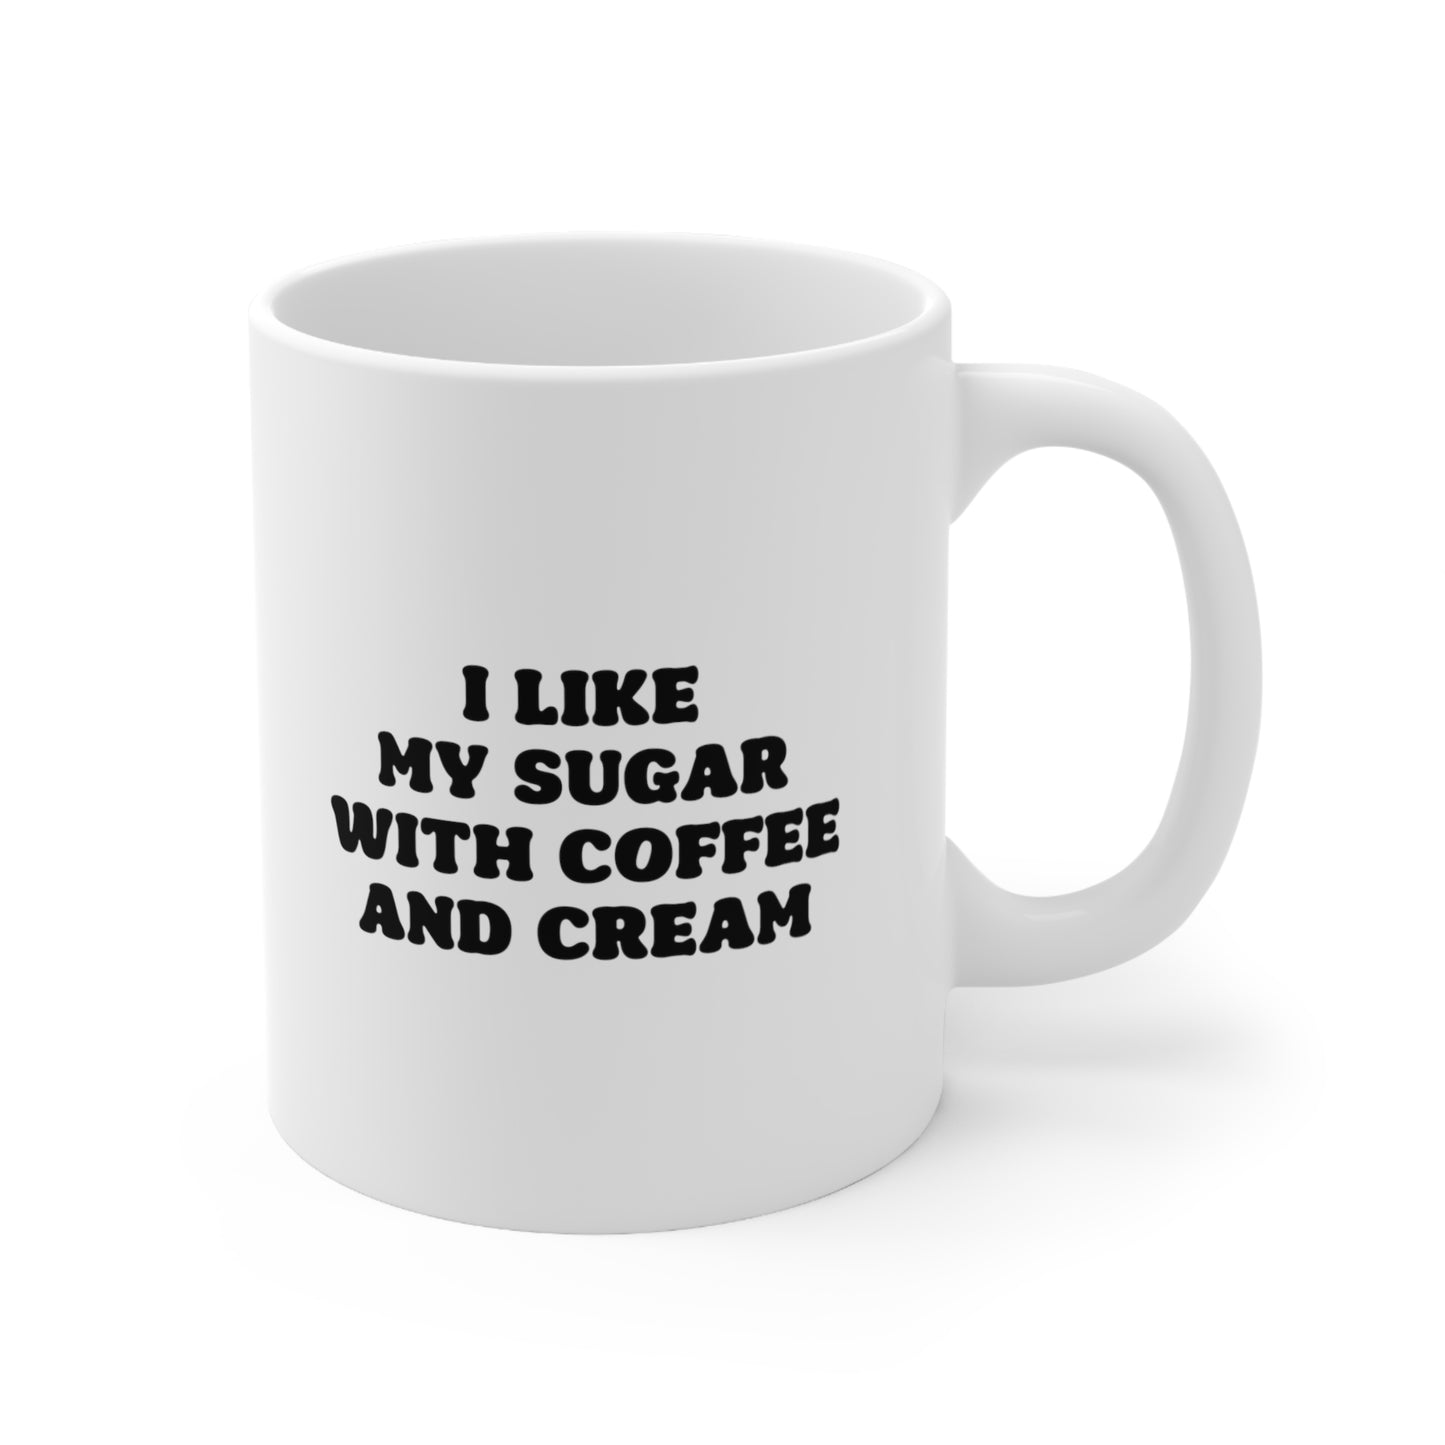 I like my sugar with coffee and cream Coffee Mug 11oz